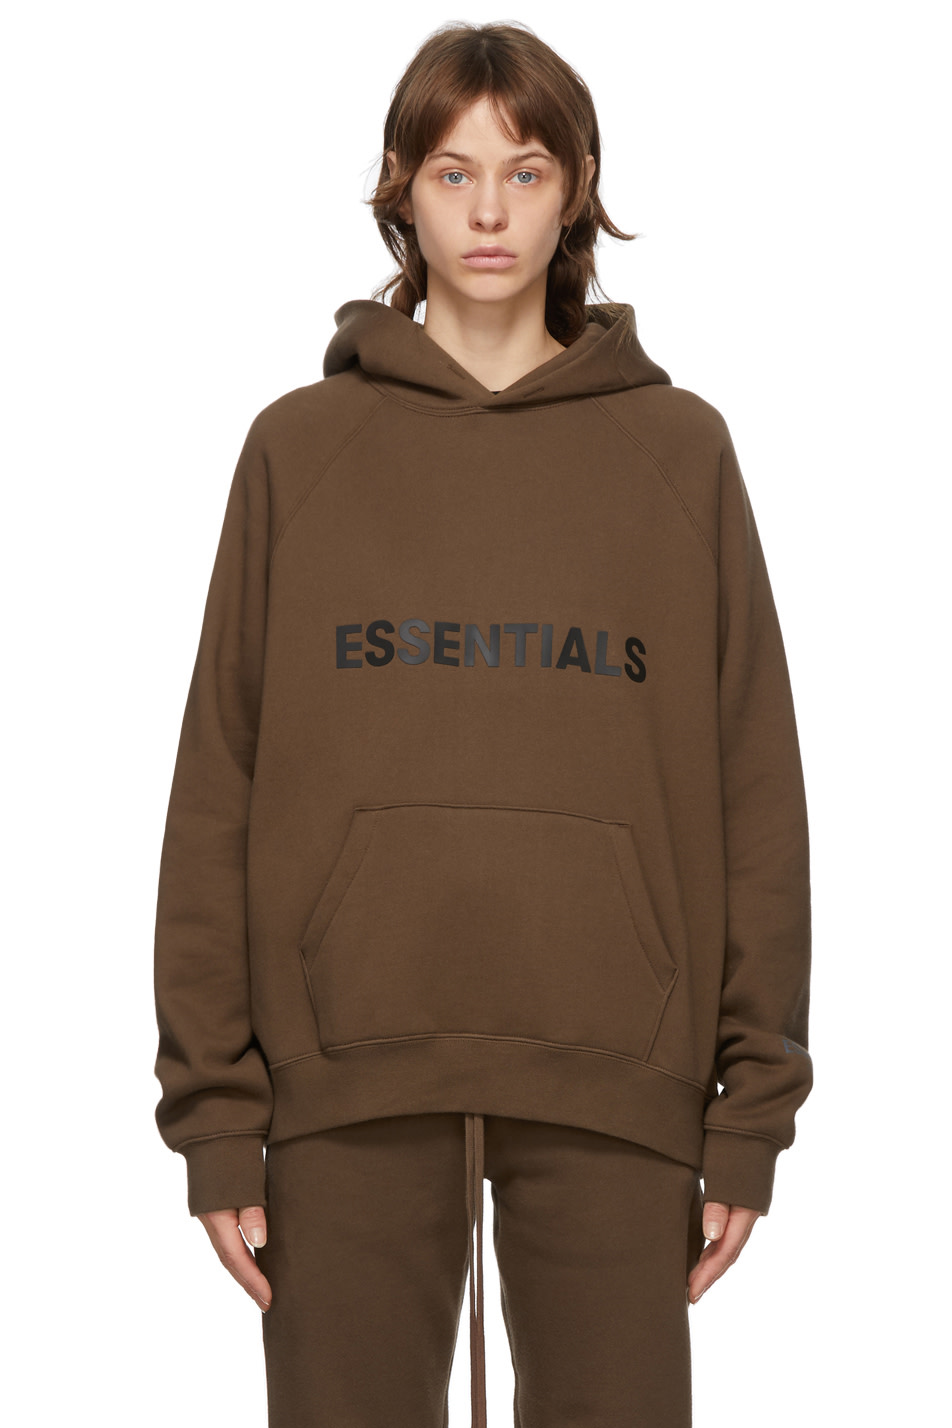 Sweater Essentials Shop, 55% OFF | www.barribarcelona.com